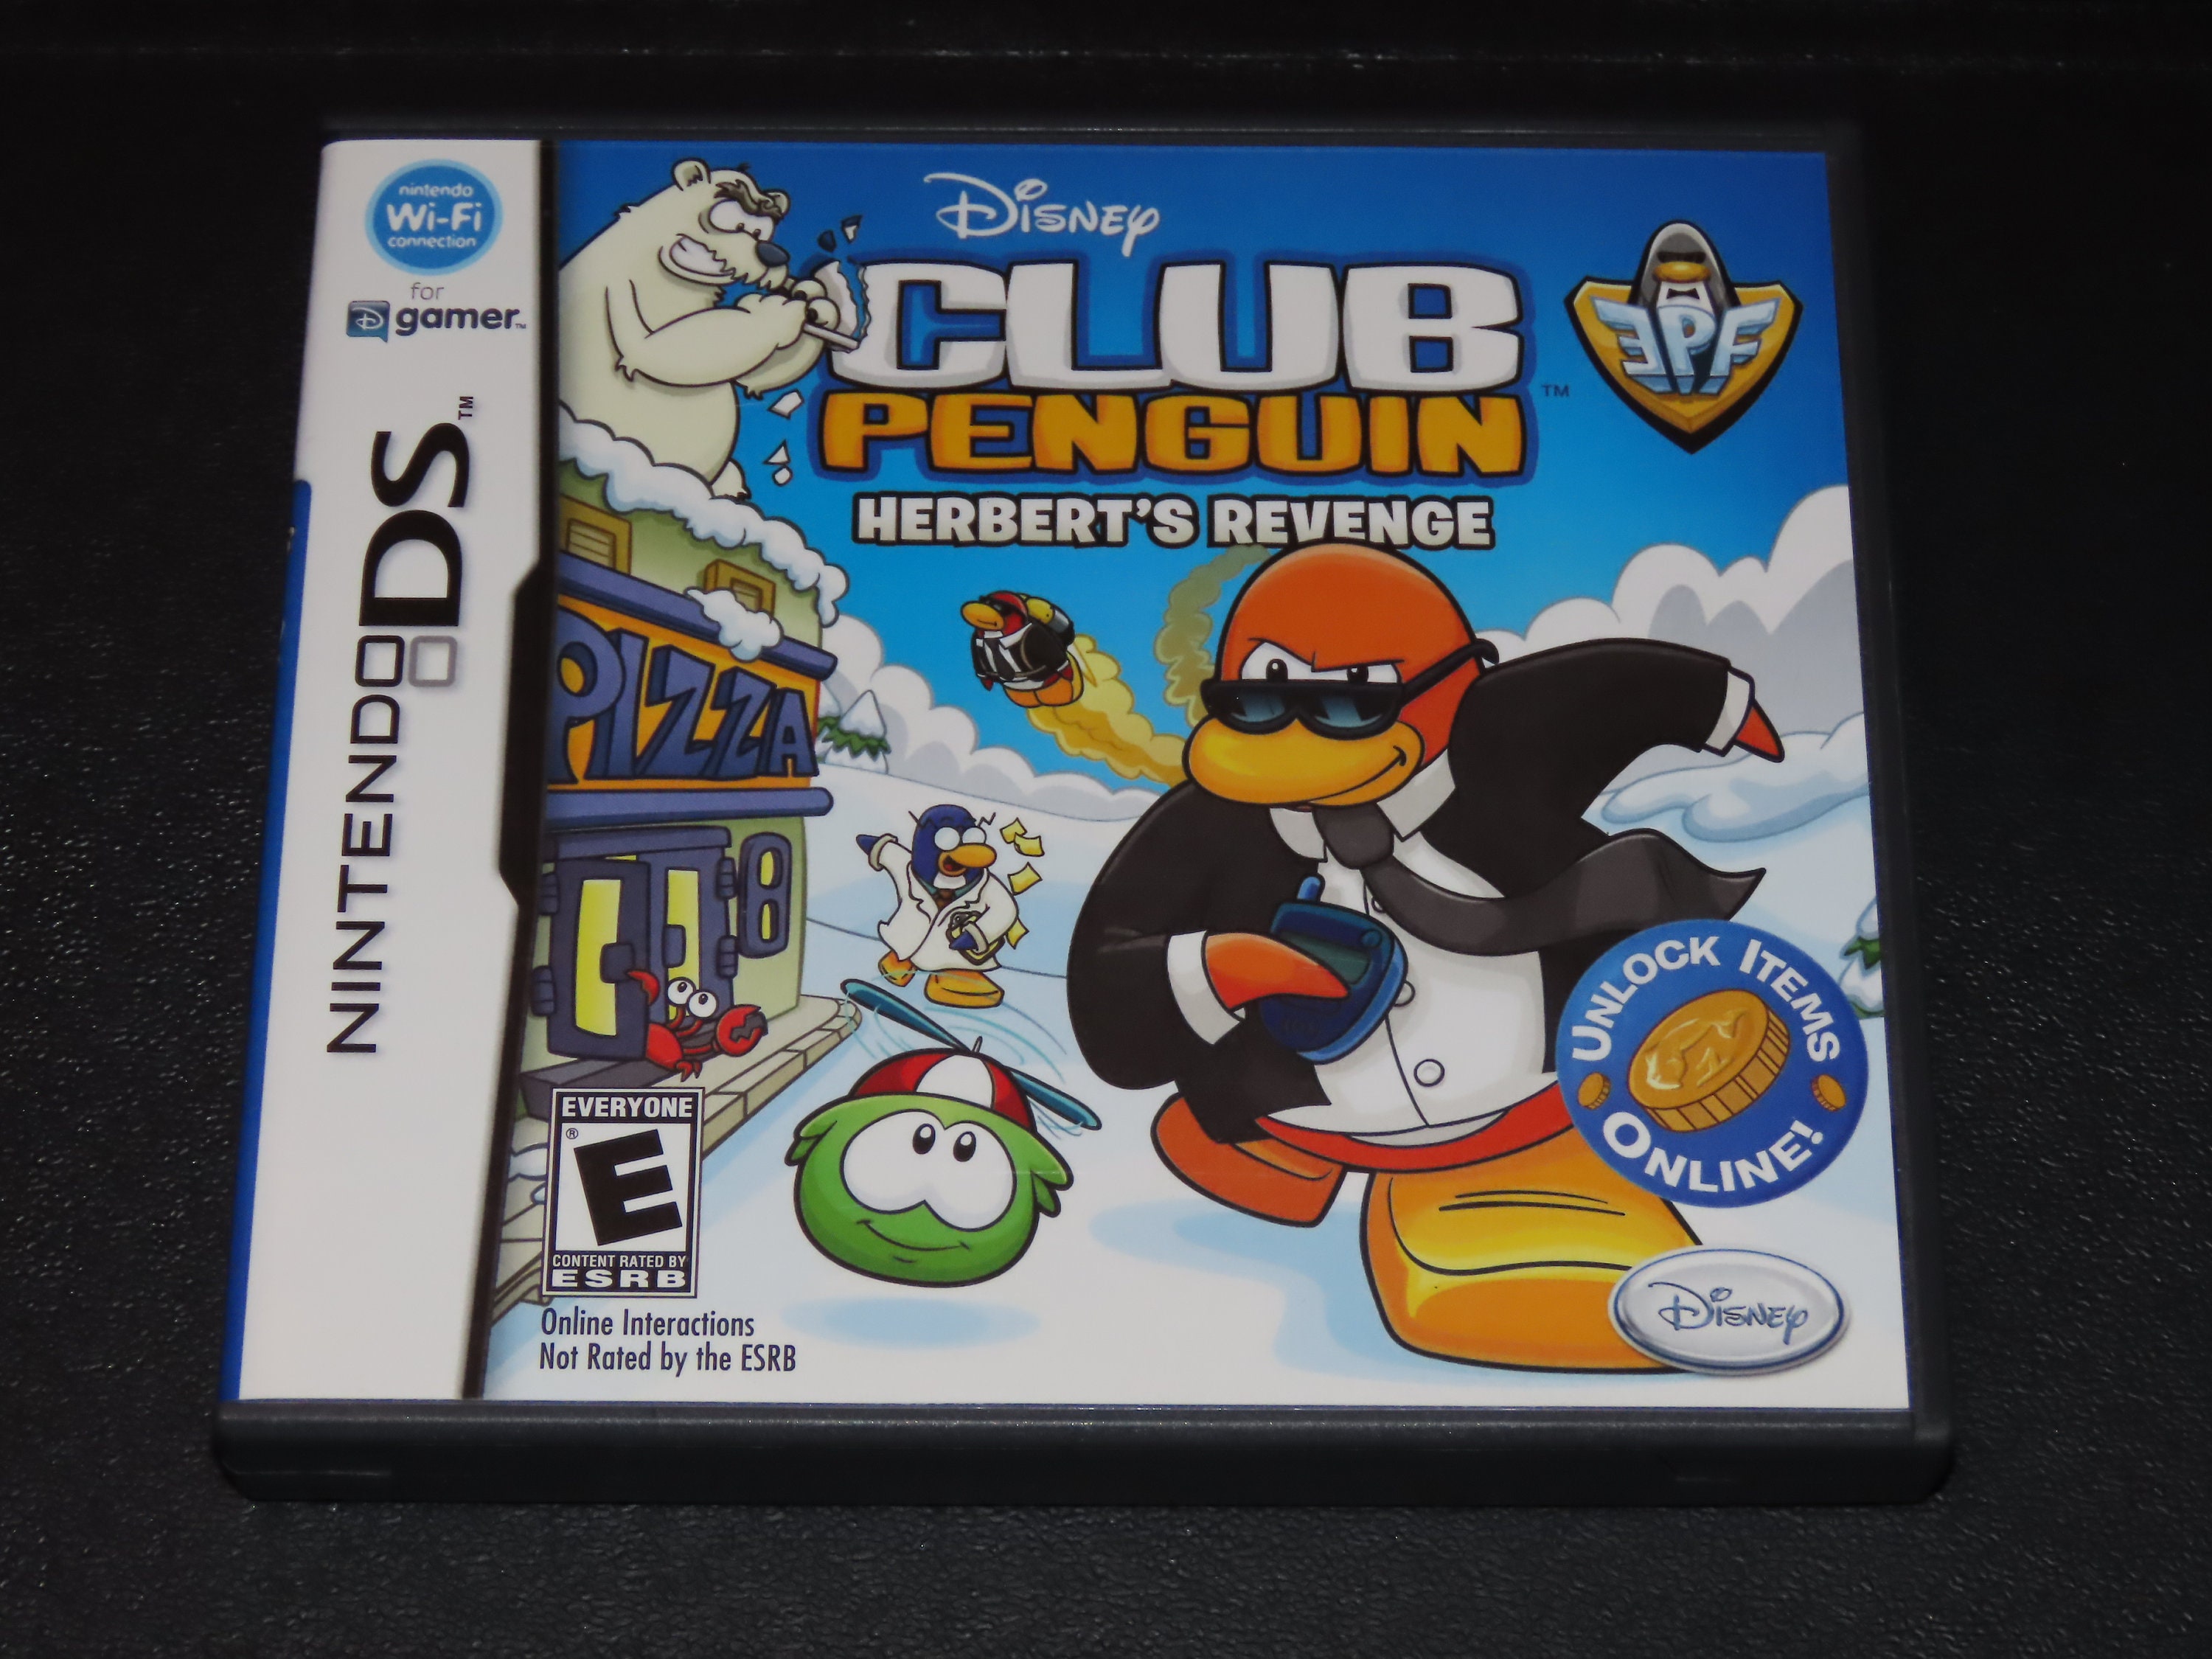 Club Penguin: Elite Penguin Force - Nintendo DS - game, booklet & case